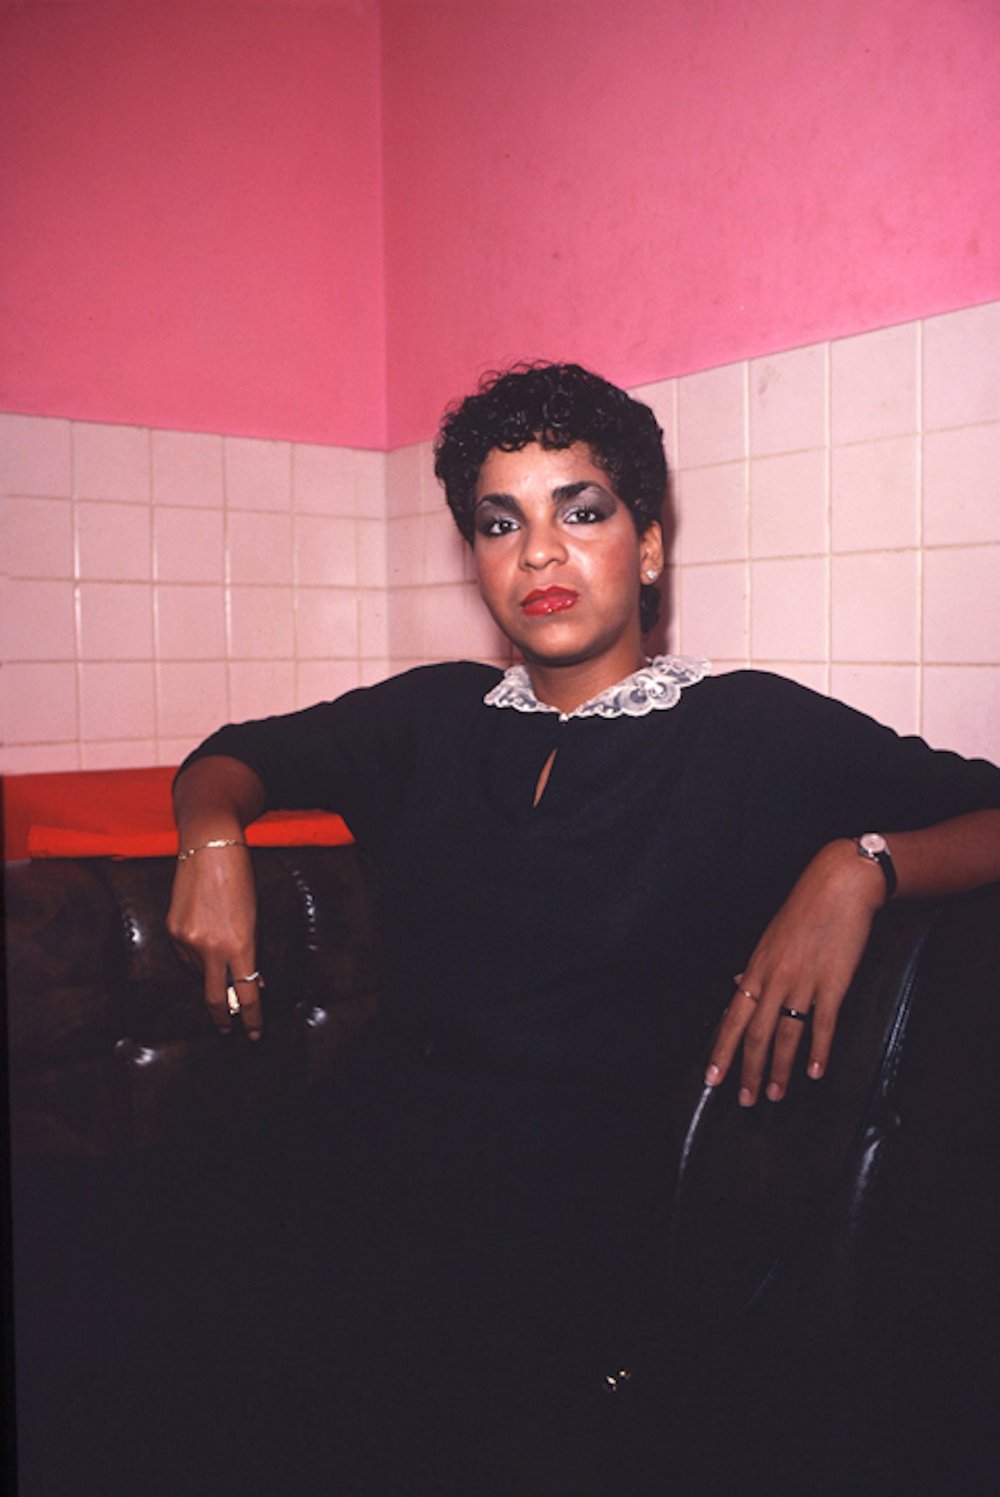 "Arlene Gottfried, the Street Photographer who Captured the Soul of 1980s New York"